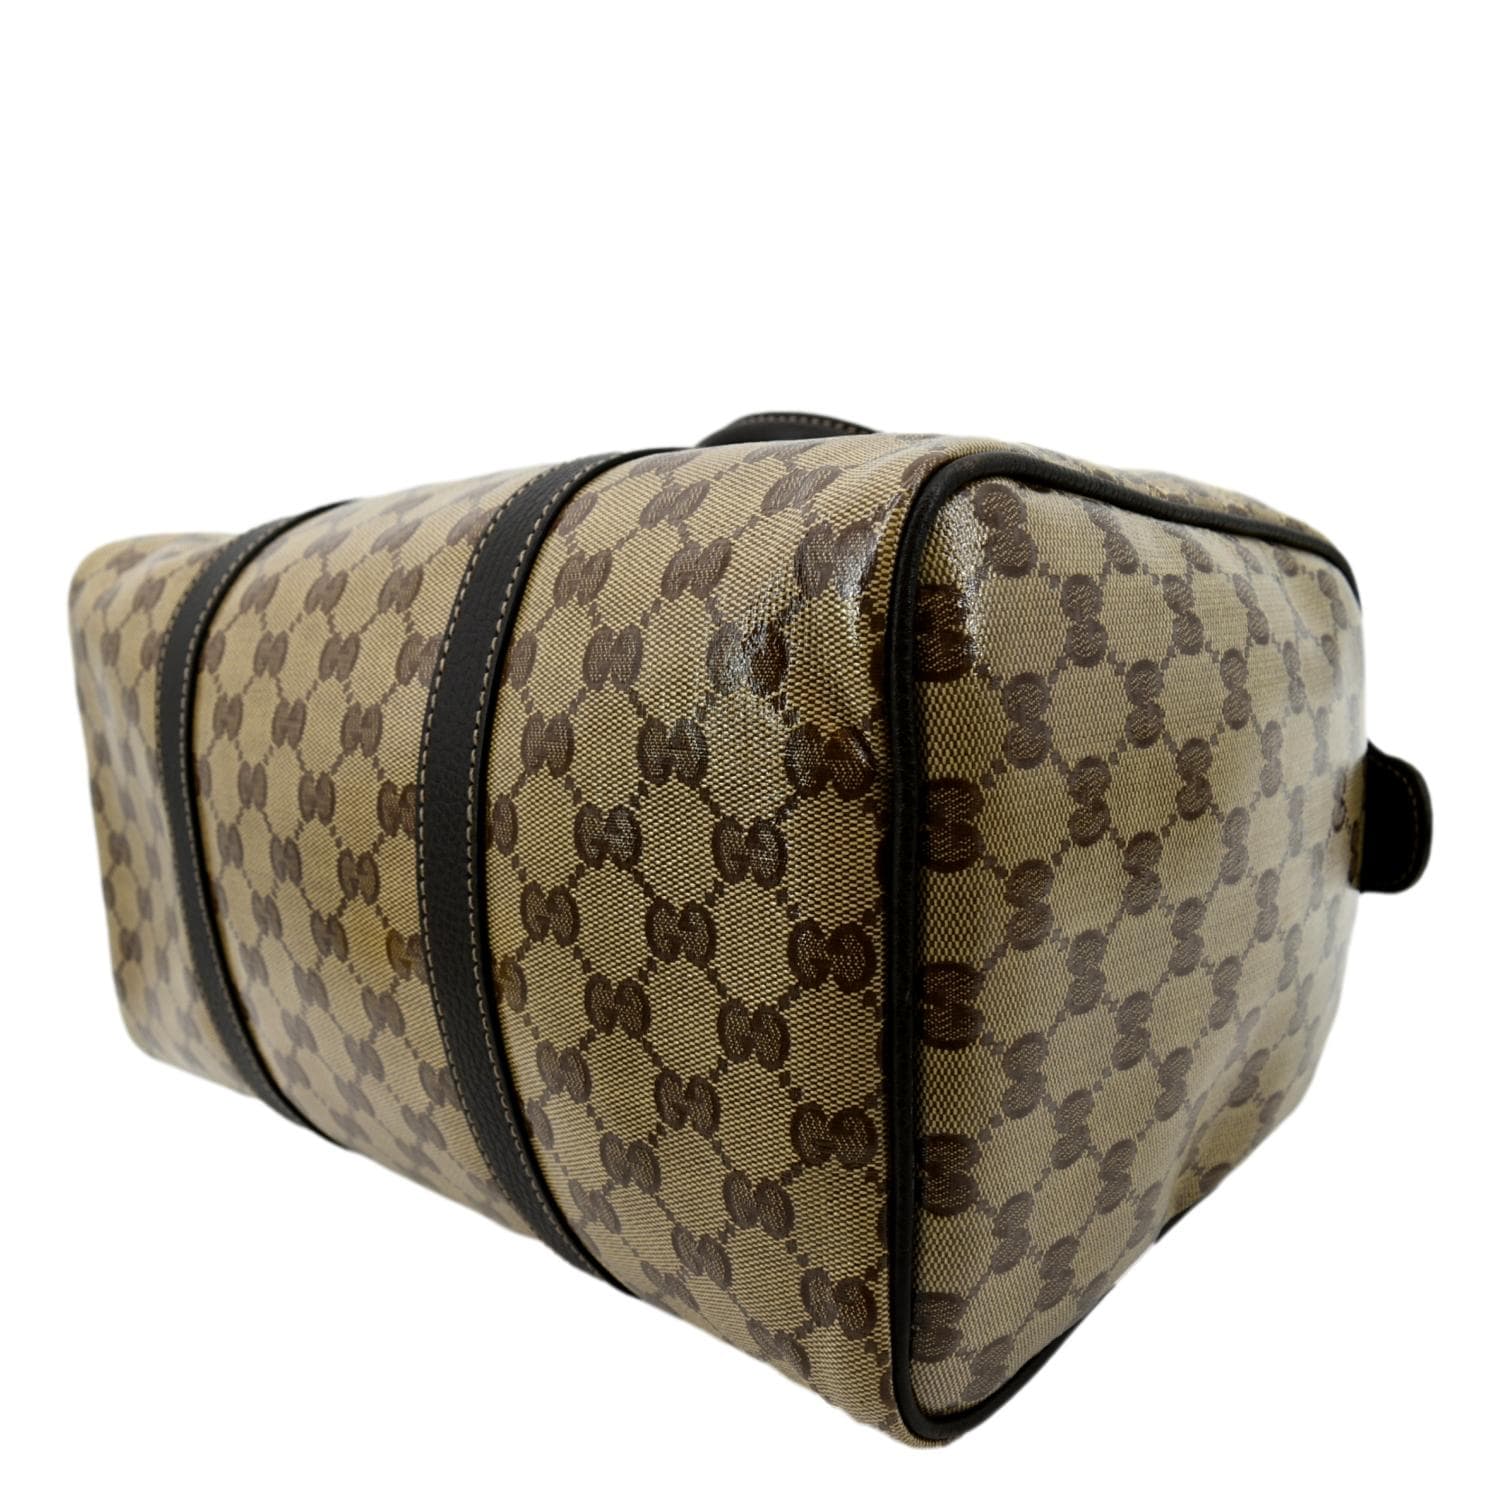 Gucci Boston handbag in beige monogram canvas and brown leather